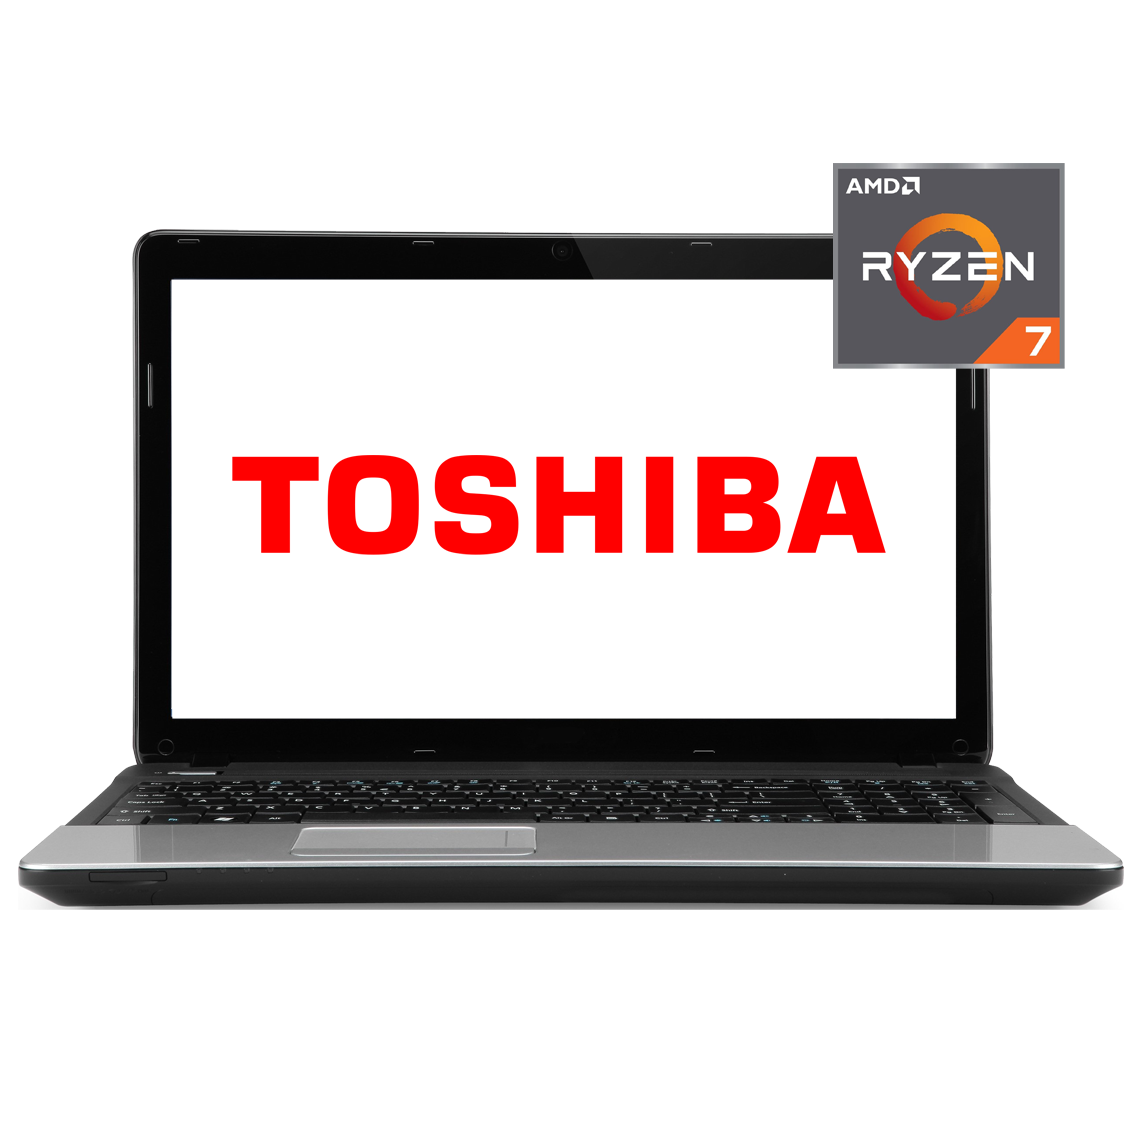 Toshiba - 15.6 inch AMD Ryzen 7